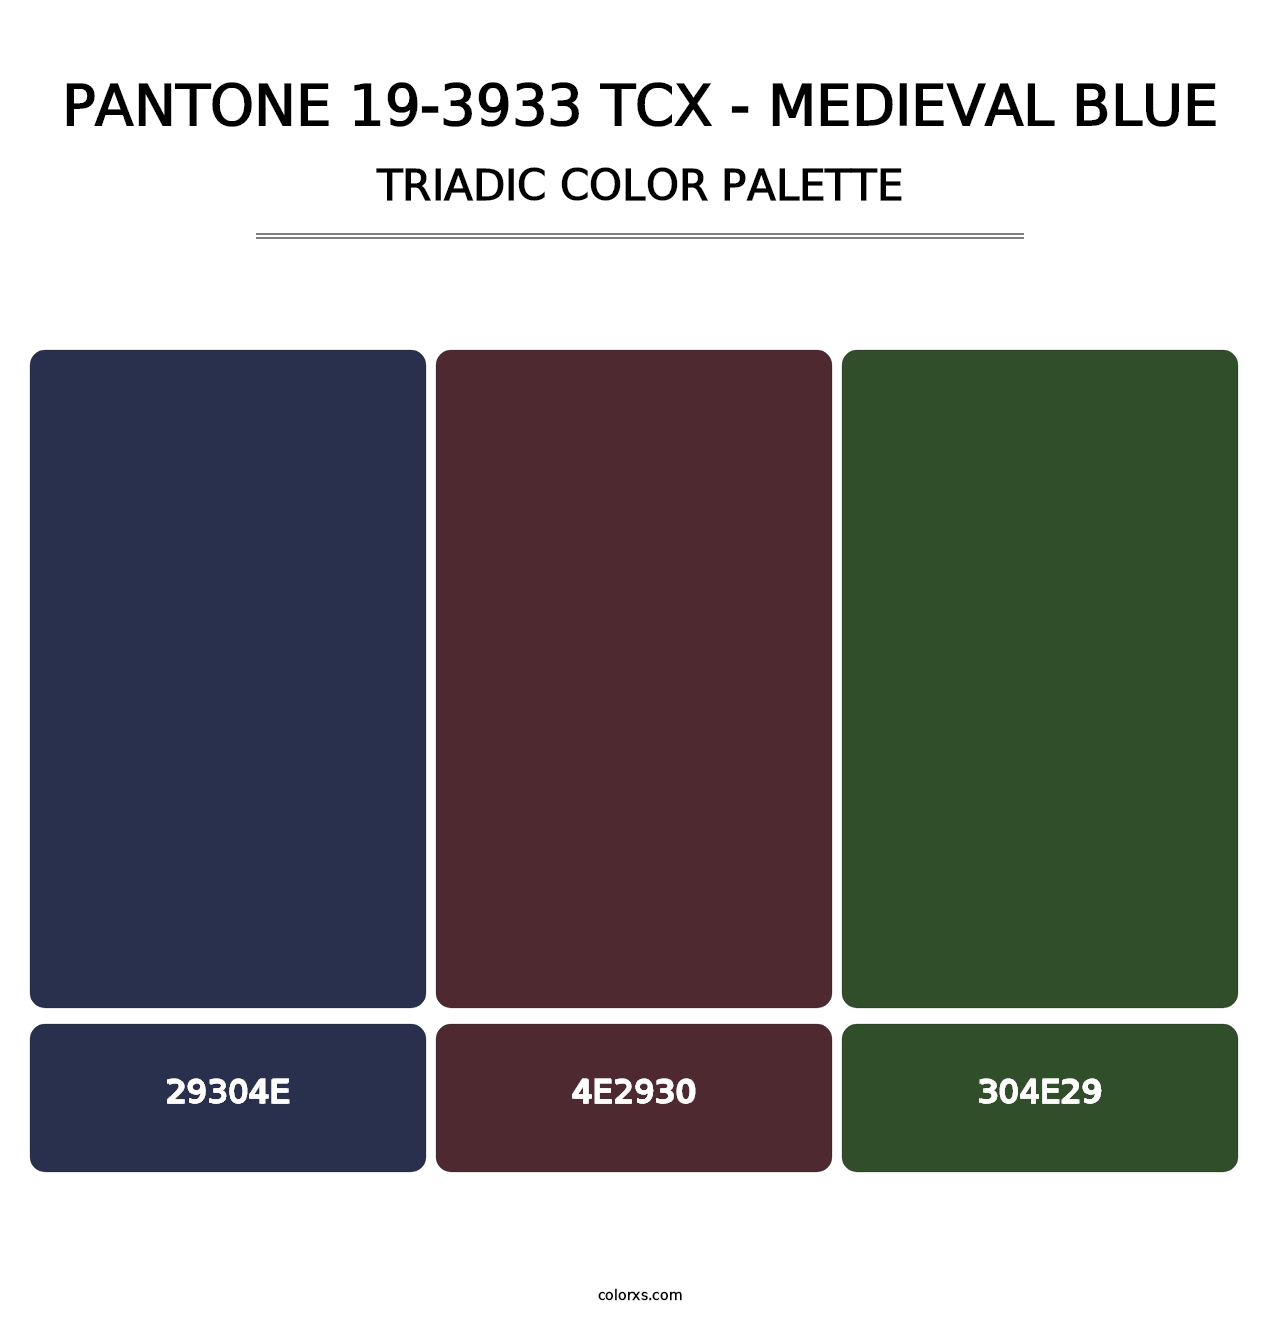 PANTONE 19-3933 TCX - Medieval Blue - Triadic Color Palette